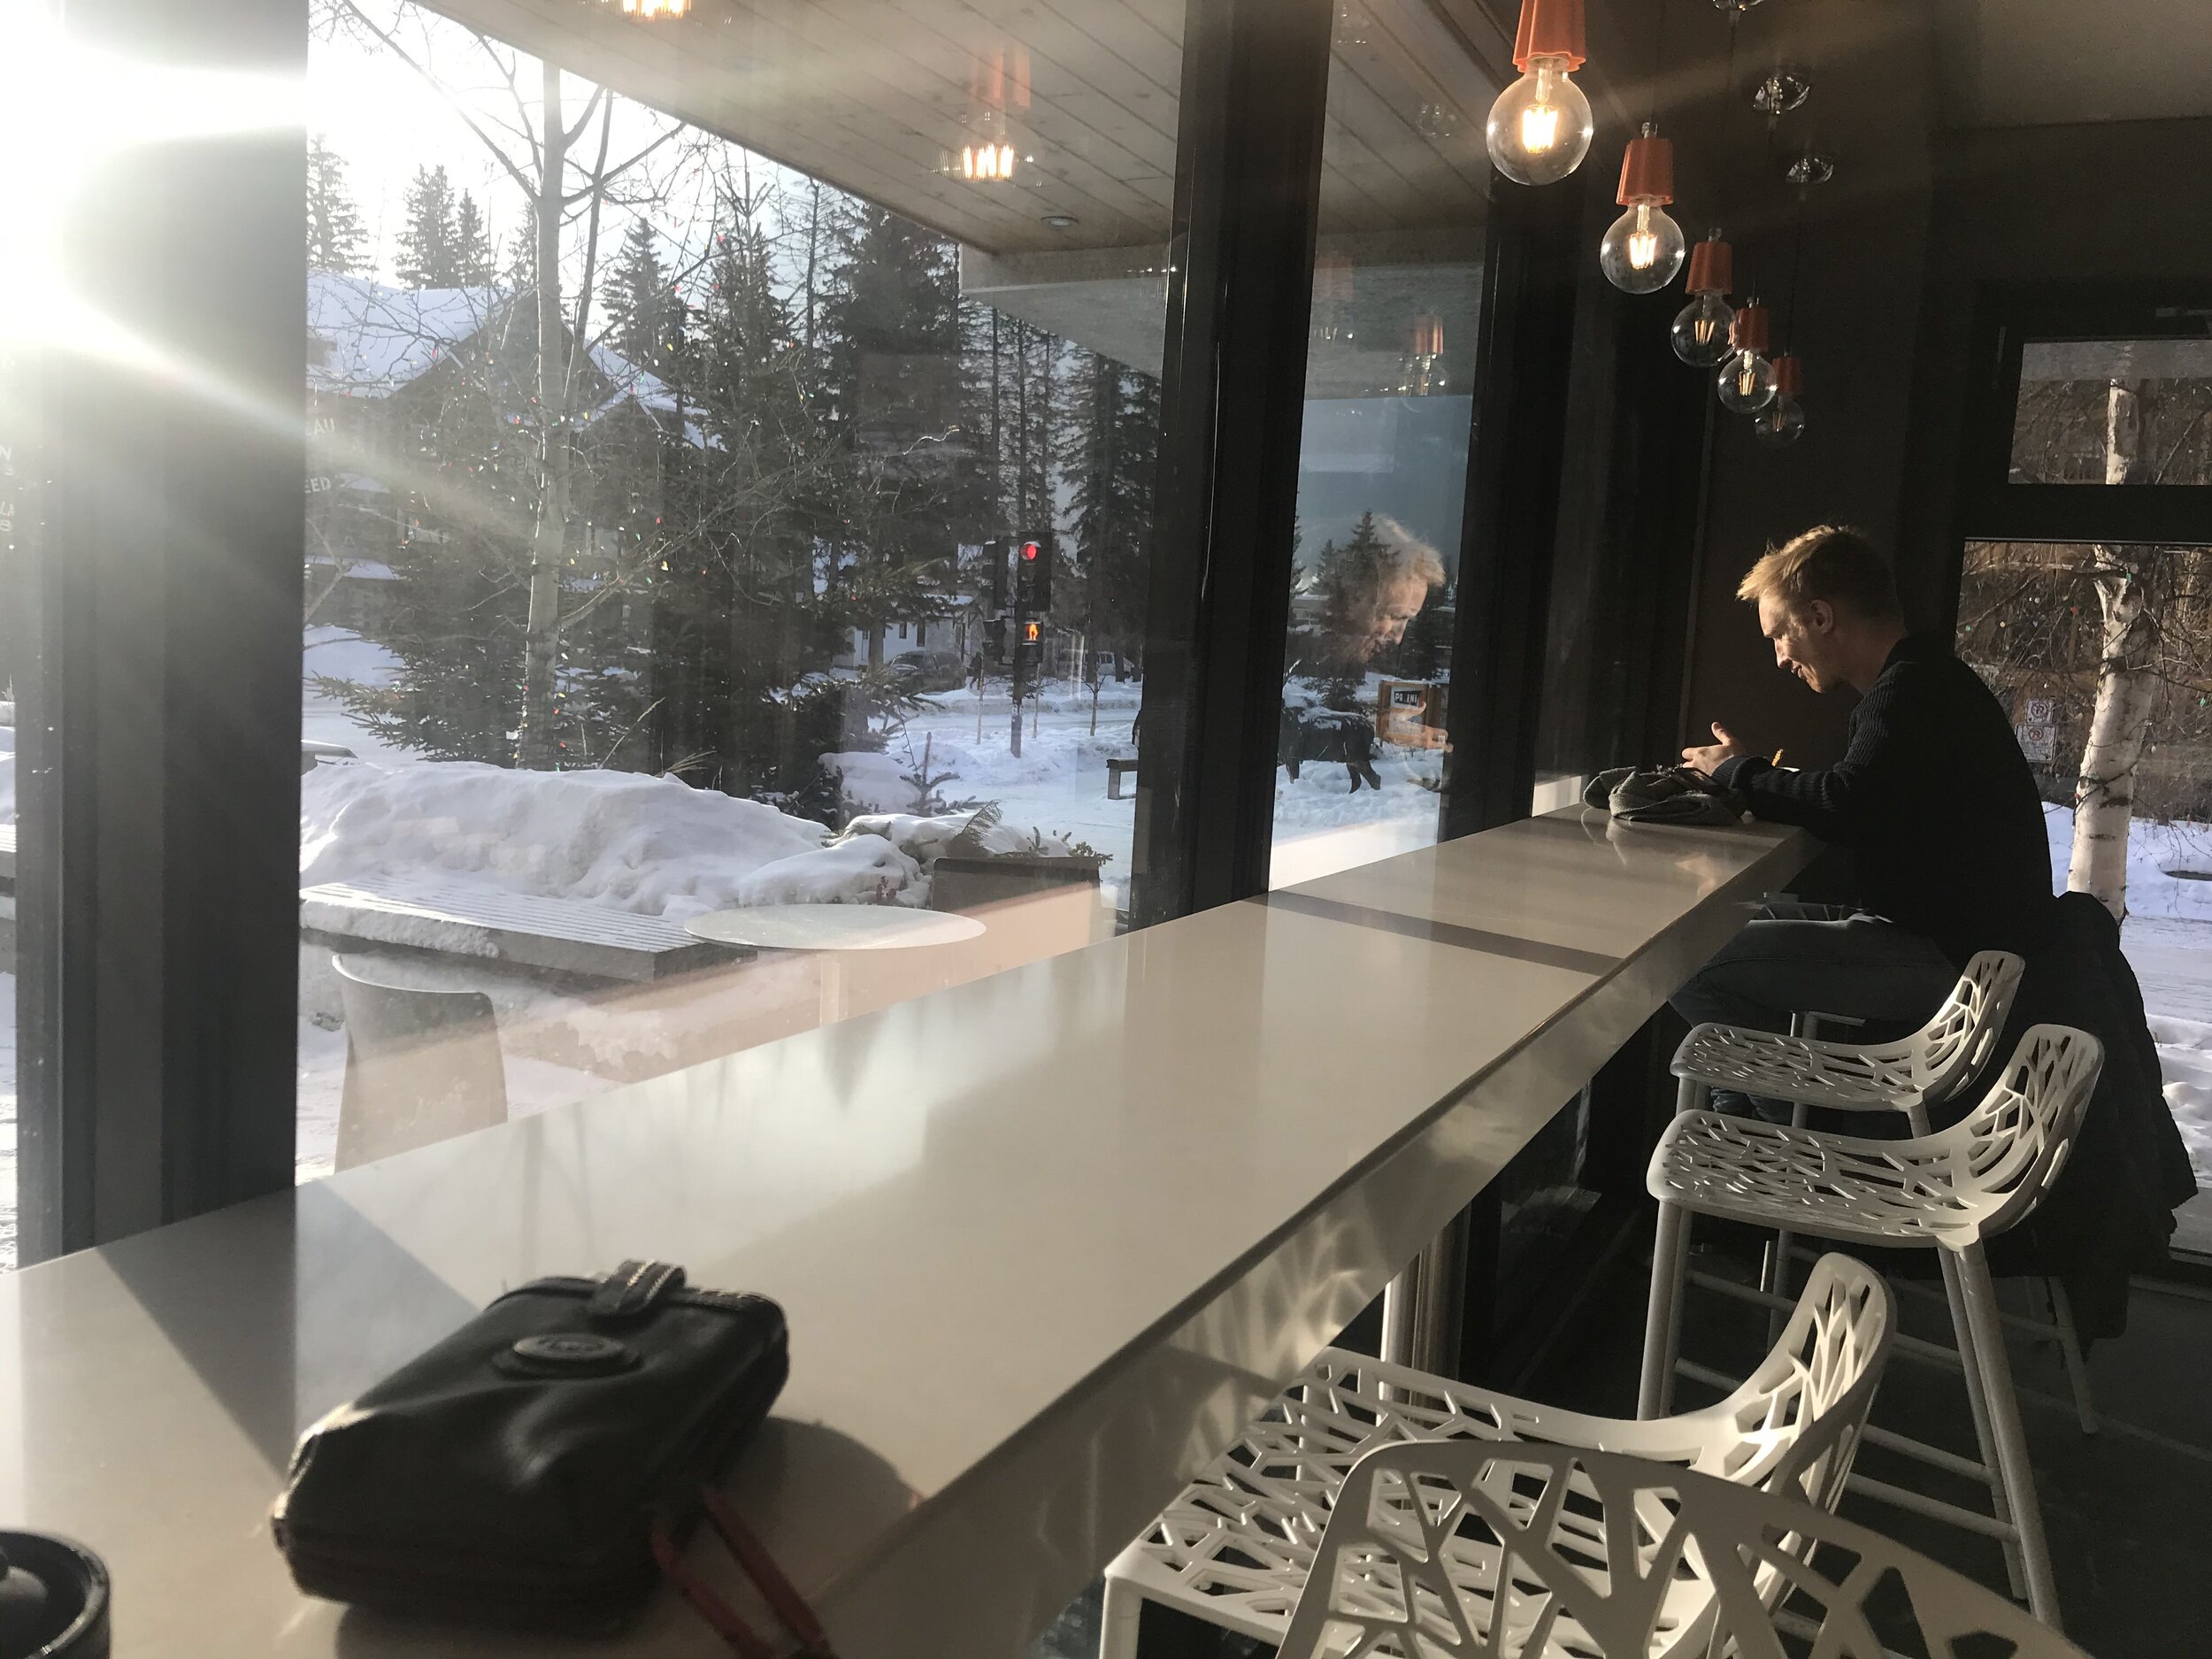 White Bark Cafe, Banff